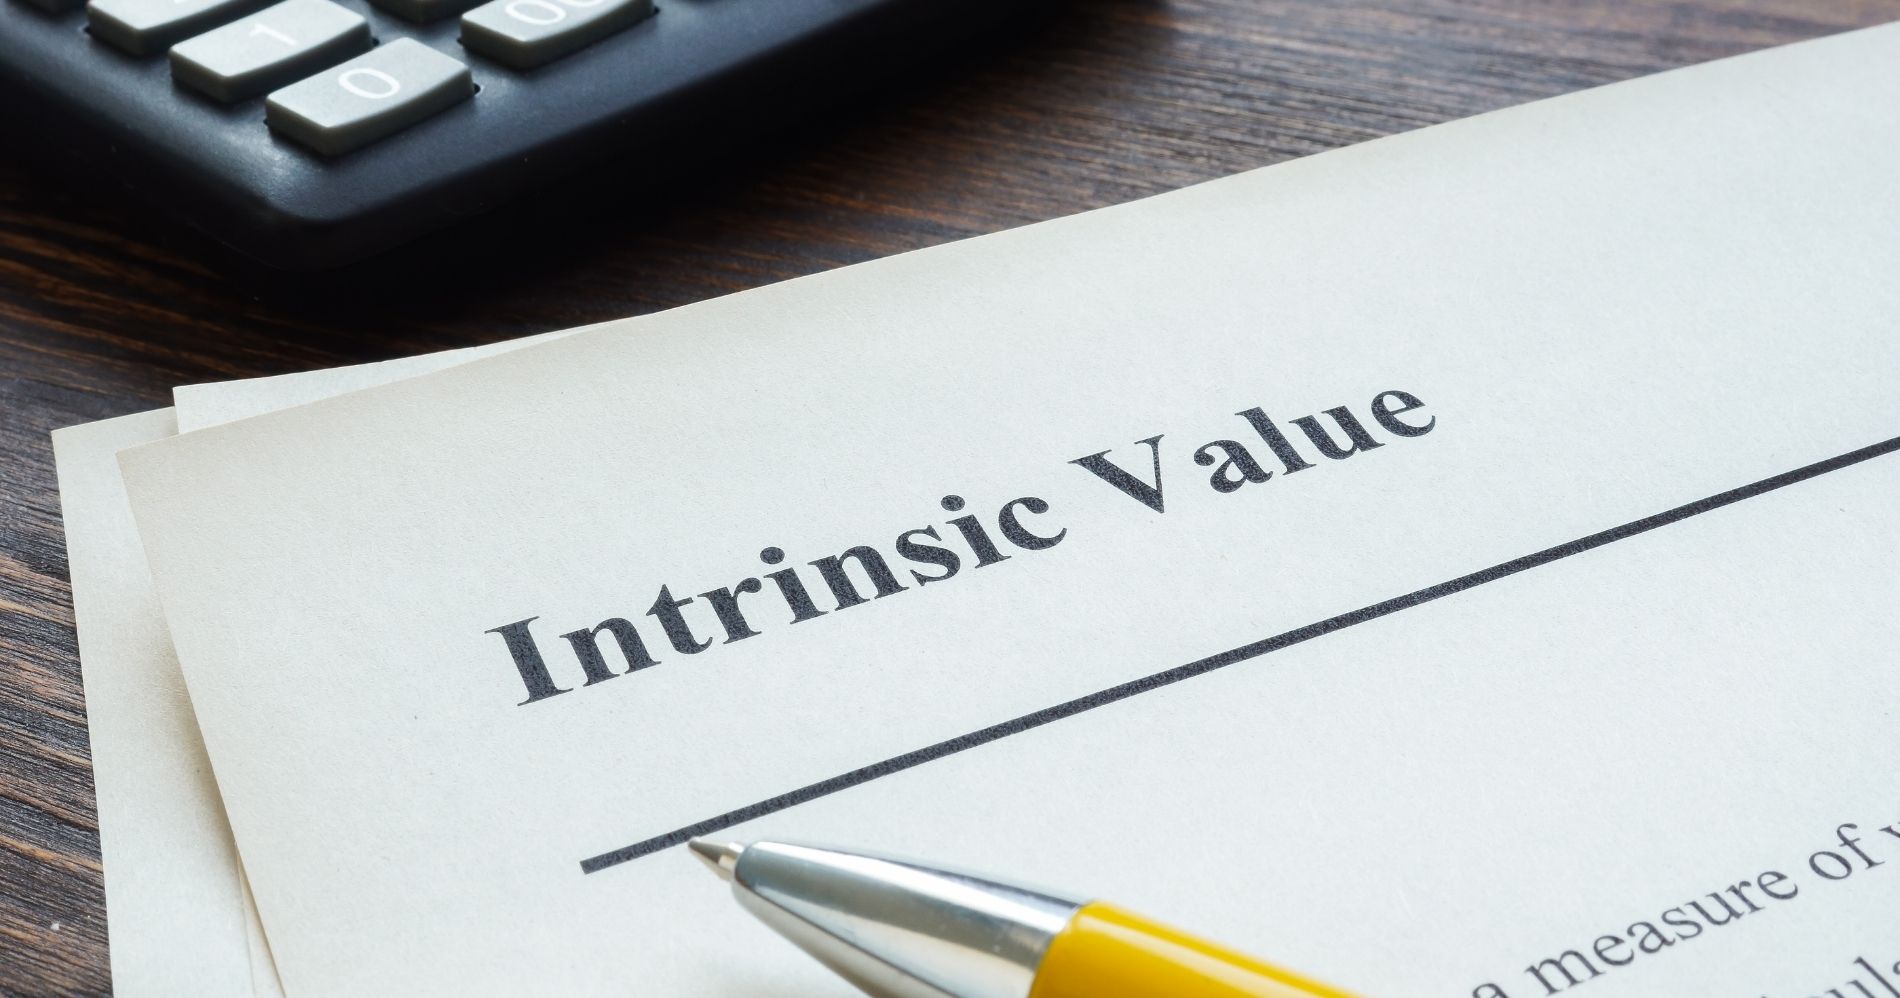 Pentingnya Intrinsic Value dalam Strategi Value Investing Illustration Bisnis Muda - Image: Canva